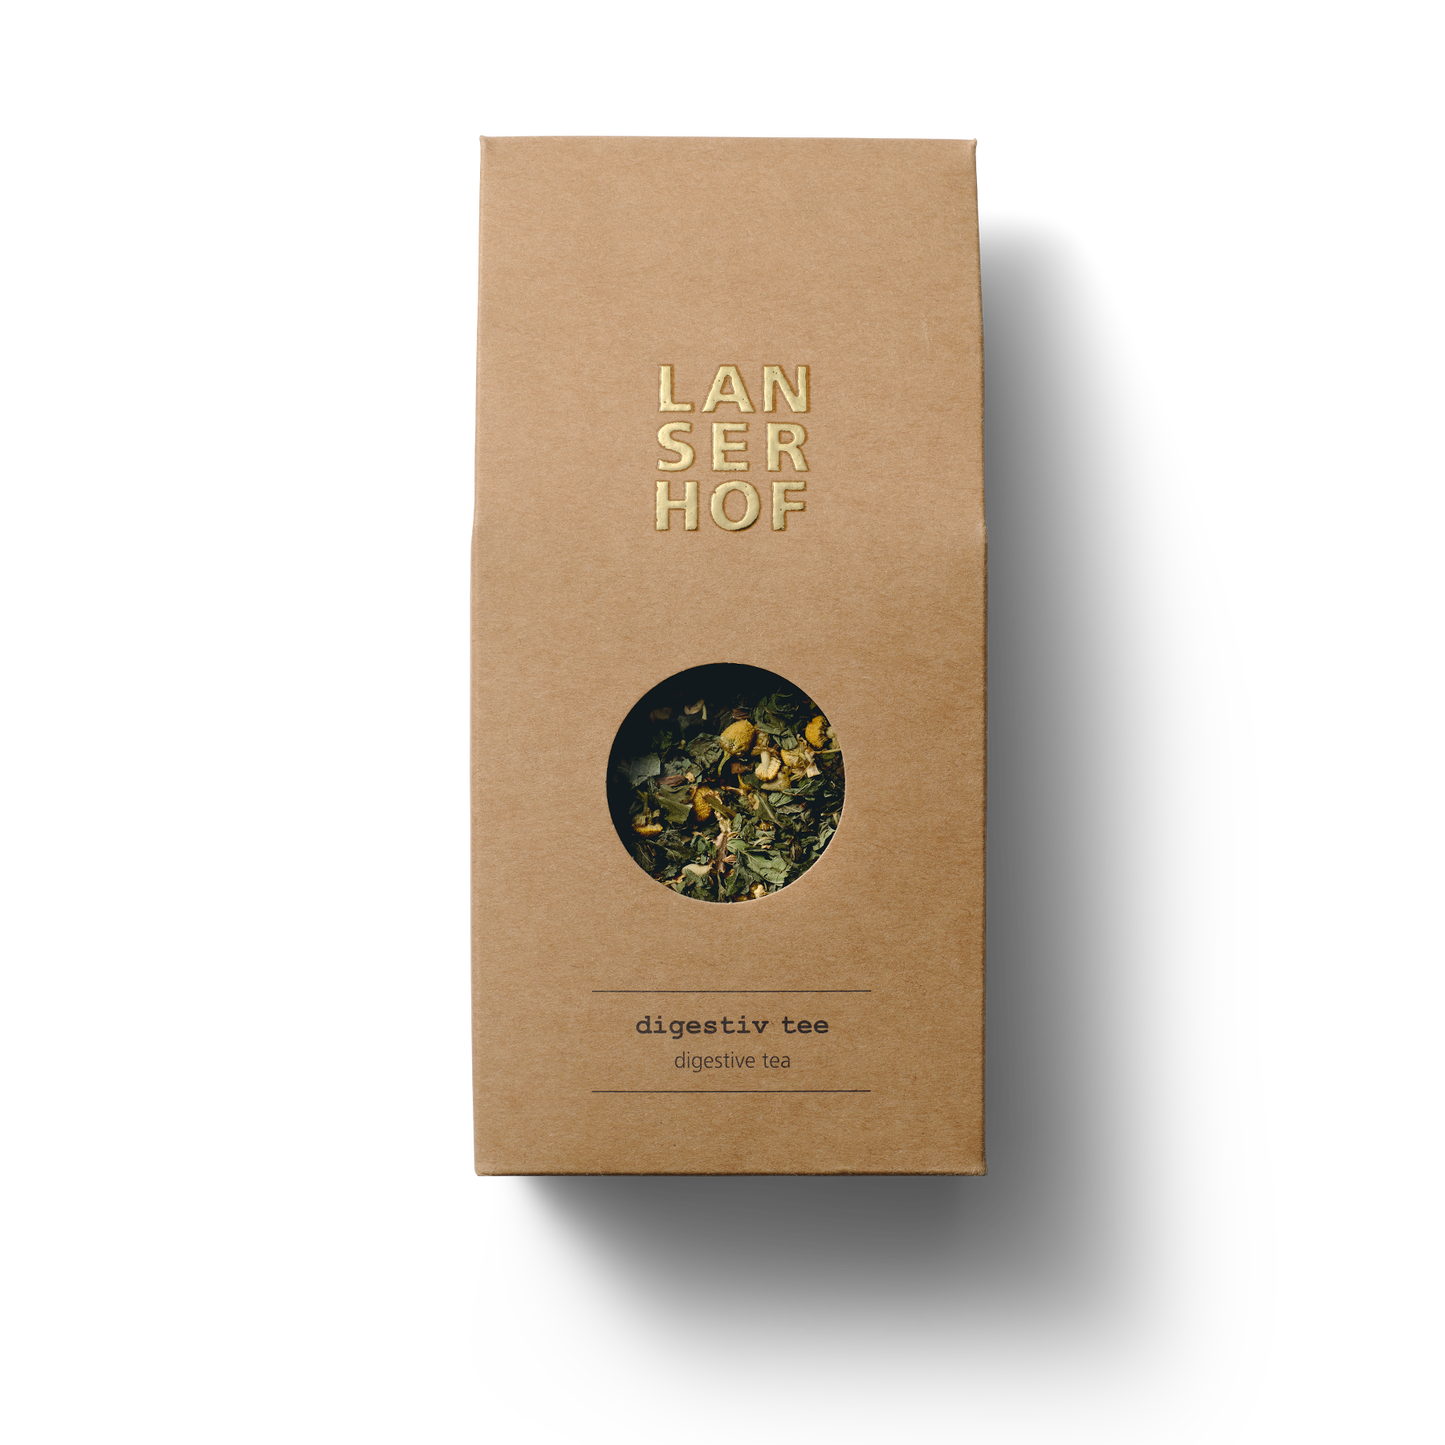 Lanserhof digestive tea